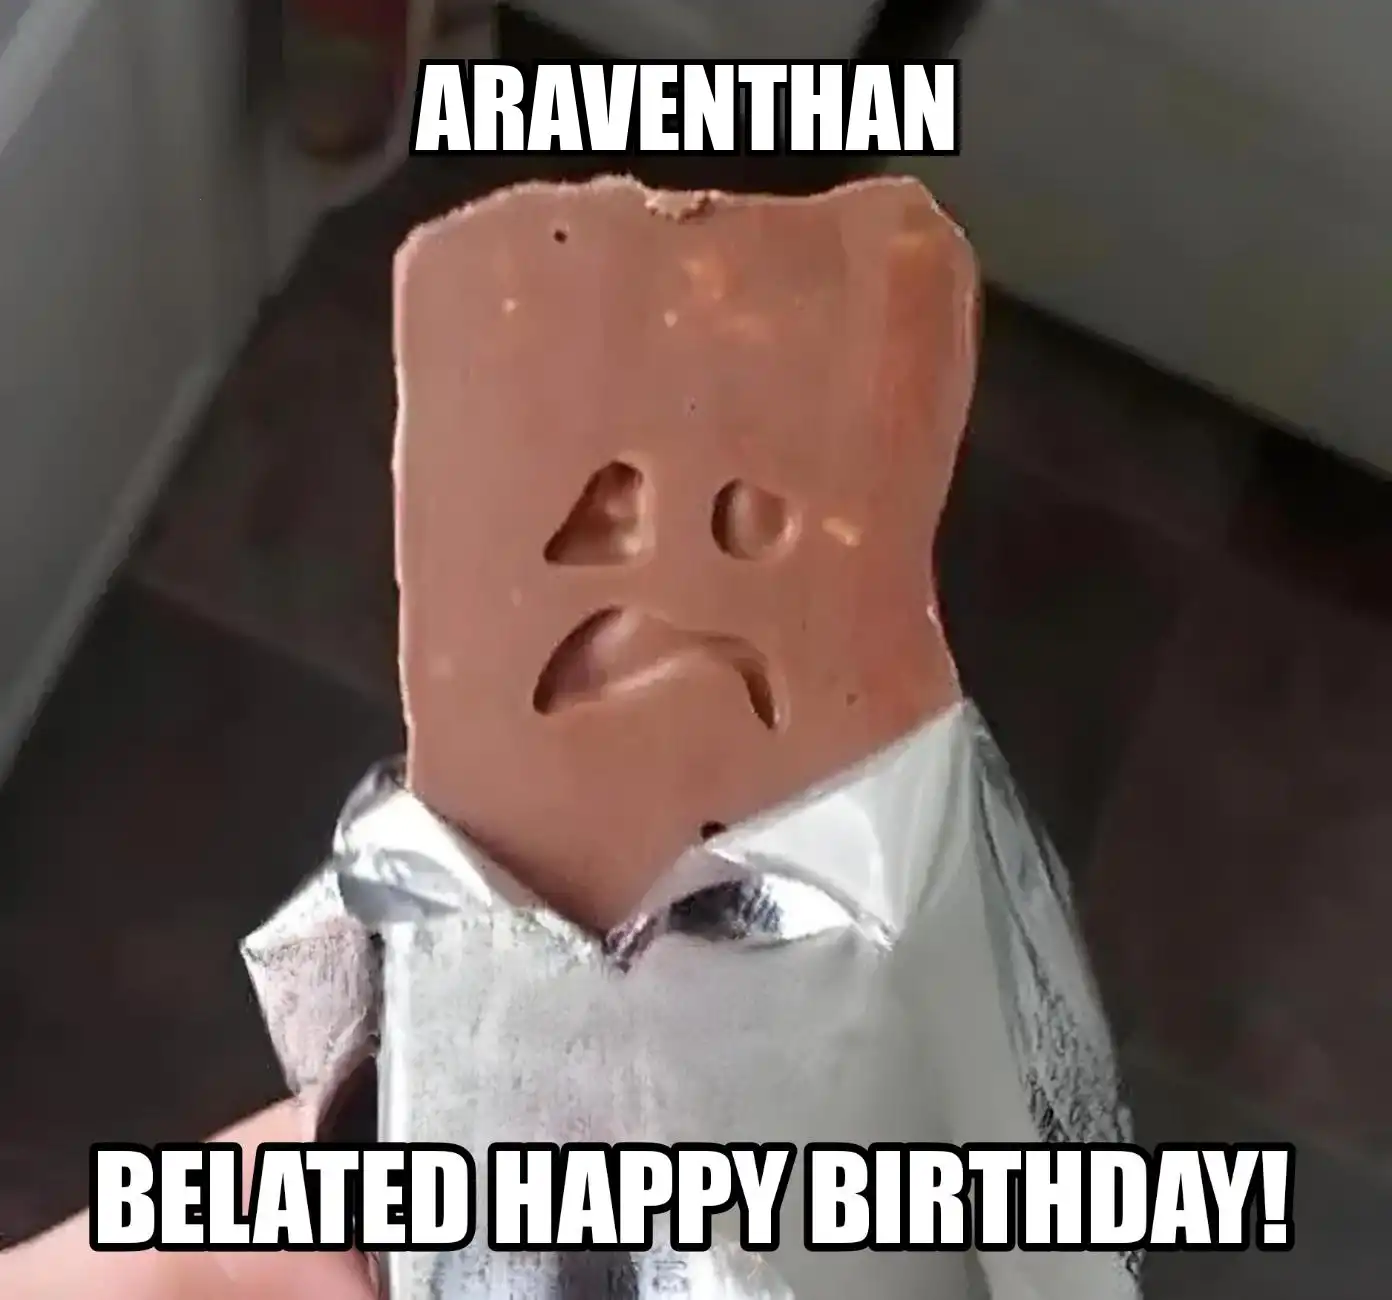 Happy Birthday Araventhan Belated Happy Birthday Meme